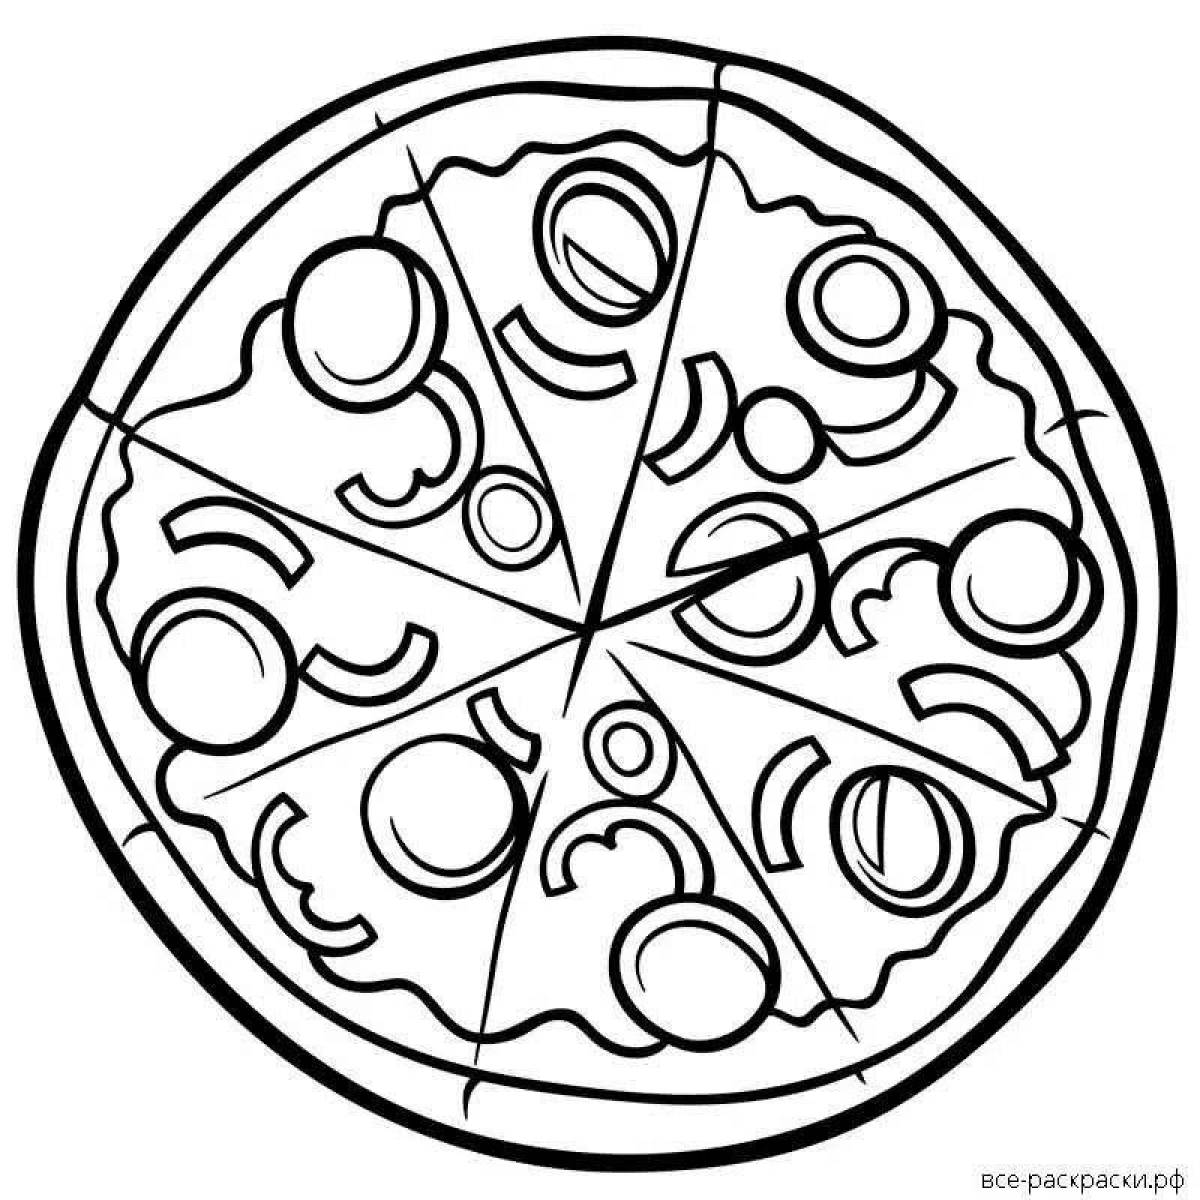 Пицца черно белая. Раскраска пицца. Пицца для распечатки. Пицца раскраска для детей. Раскраска антистресс пицца.